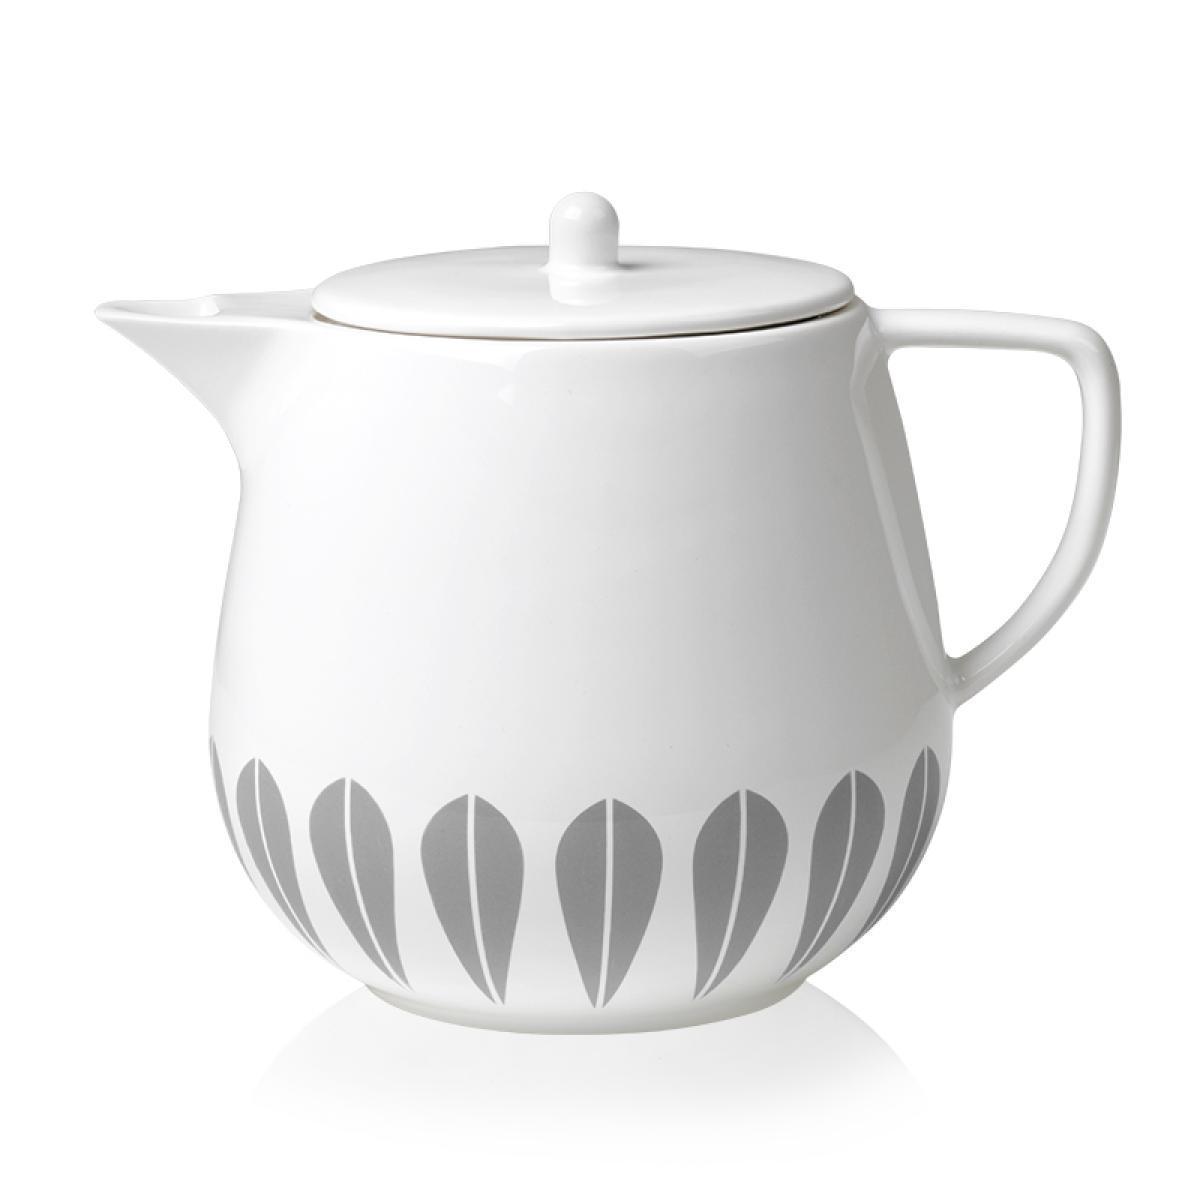 Lucie Kaas Arne Clausen Collection Teapot, grijs